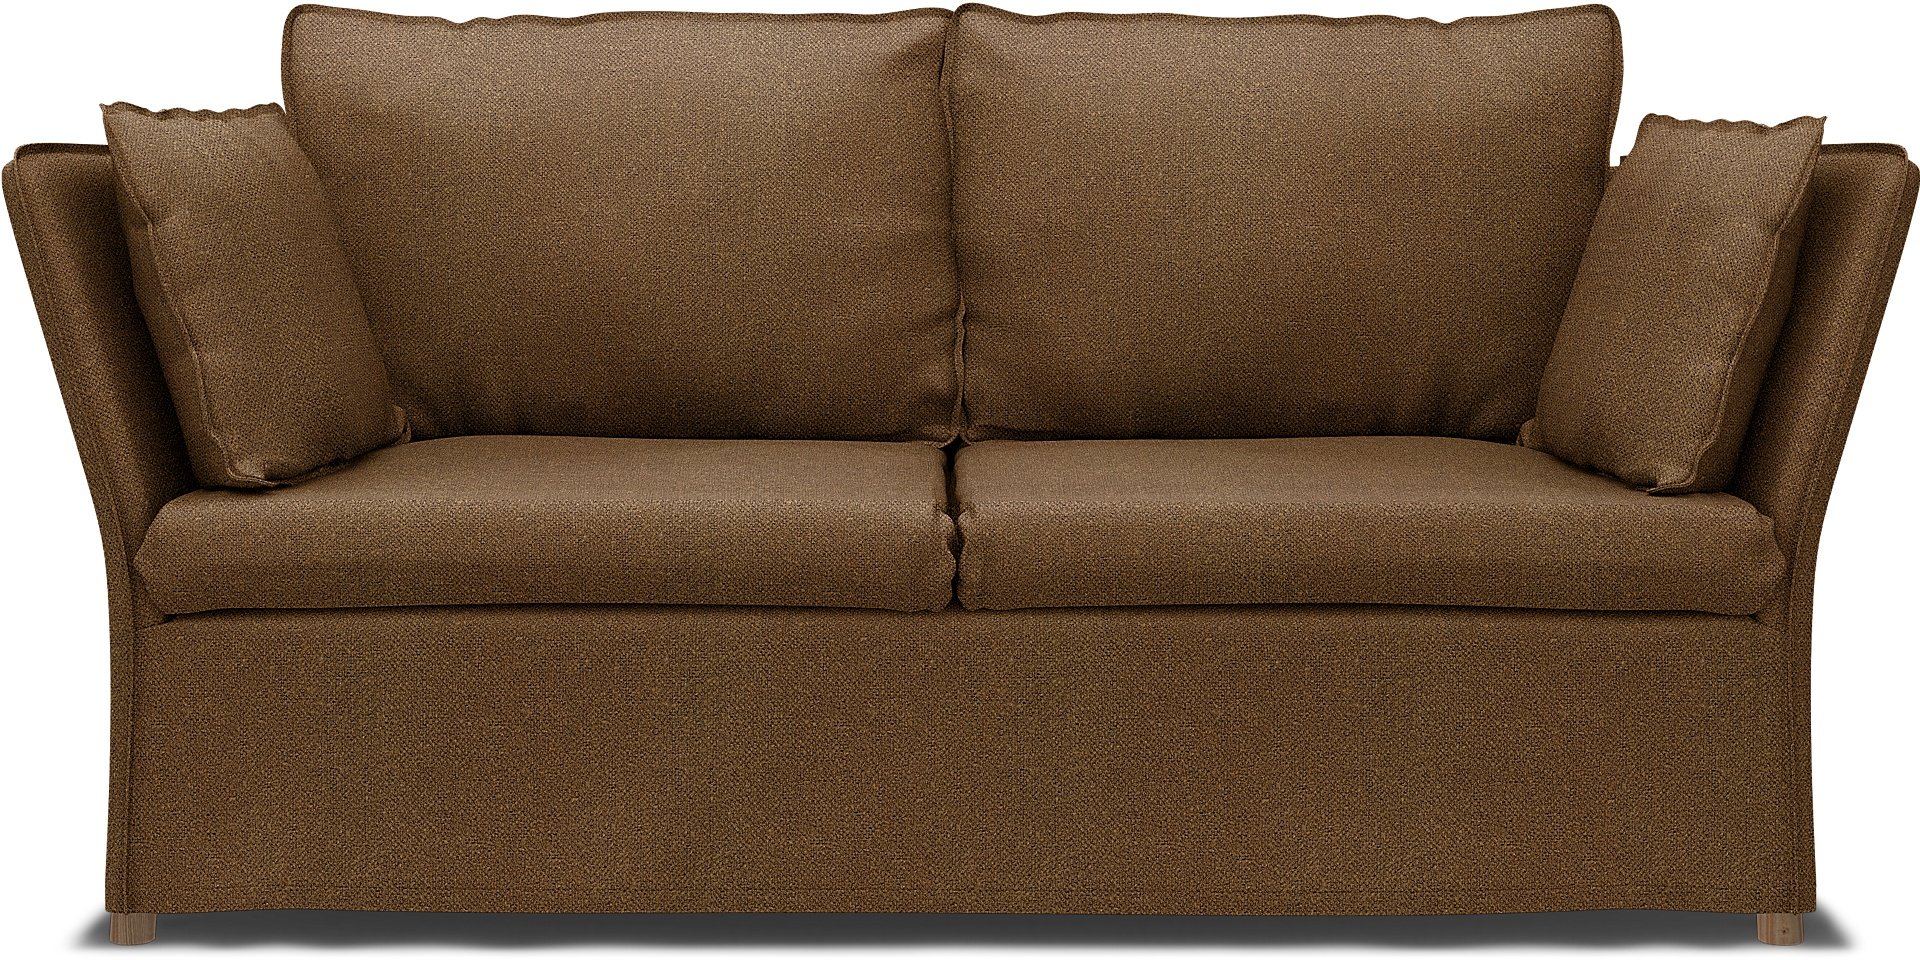 IKEA - Backsalen 2 seater sofa, Auburn, Boucle & Texture - Bemz